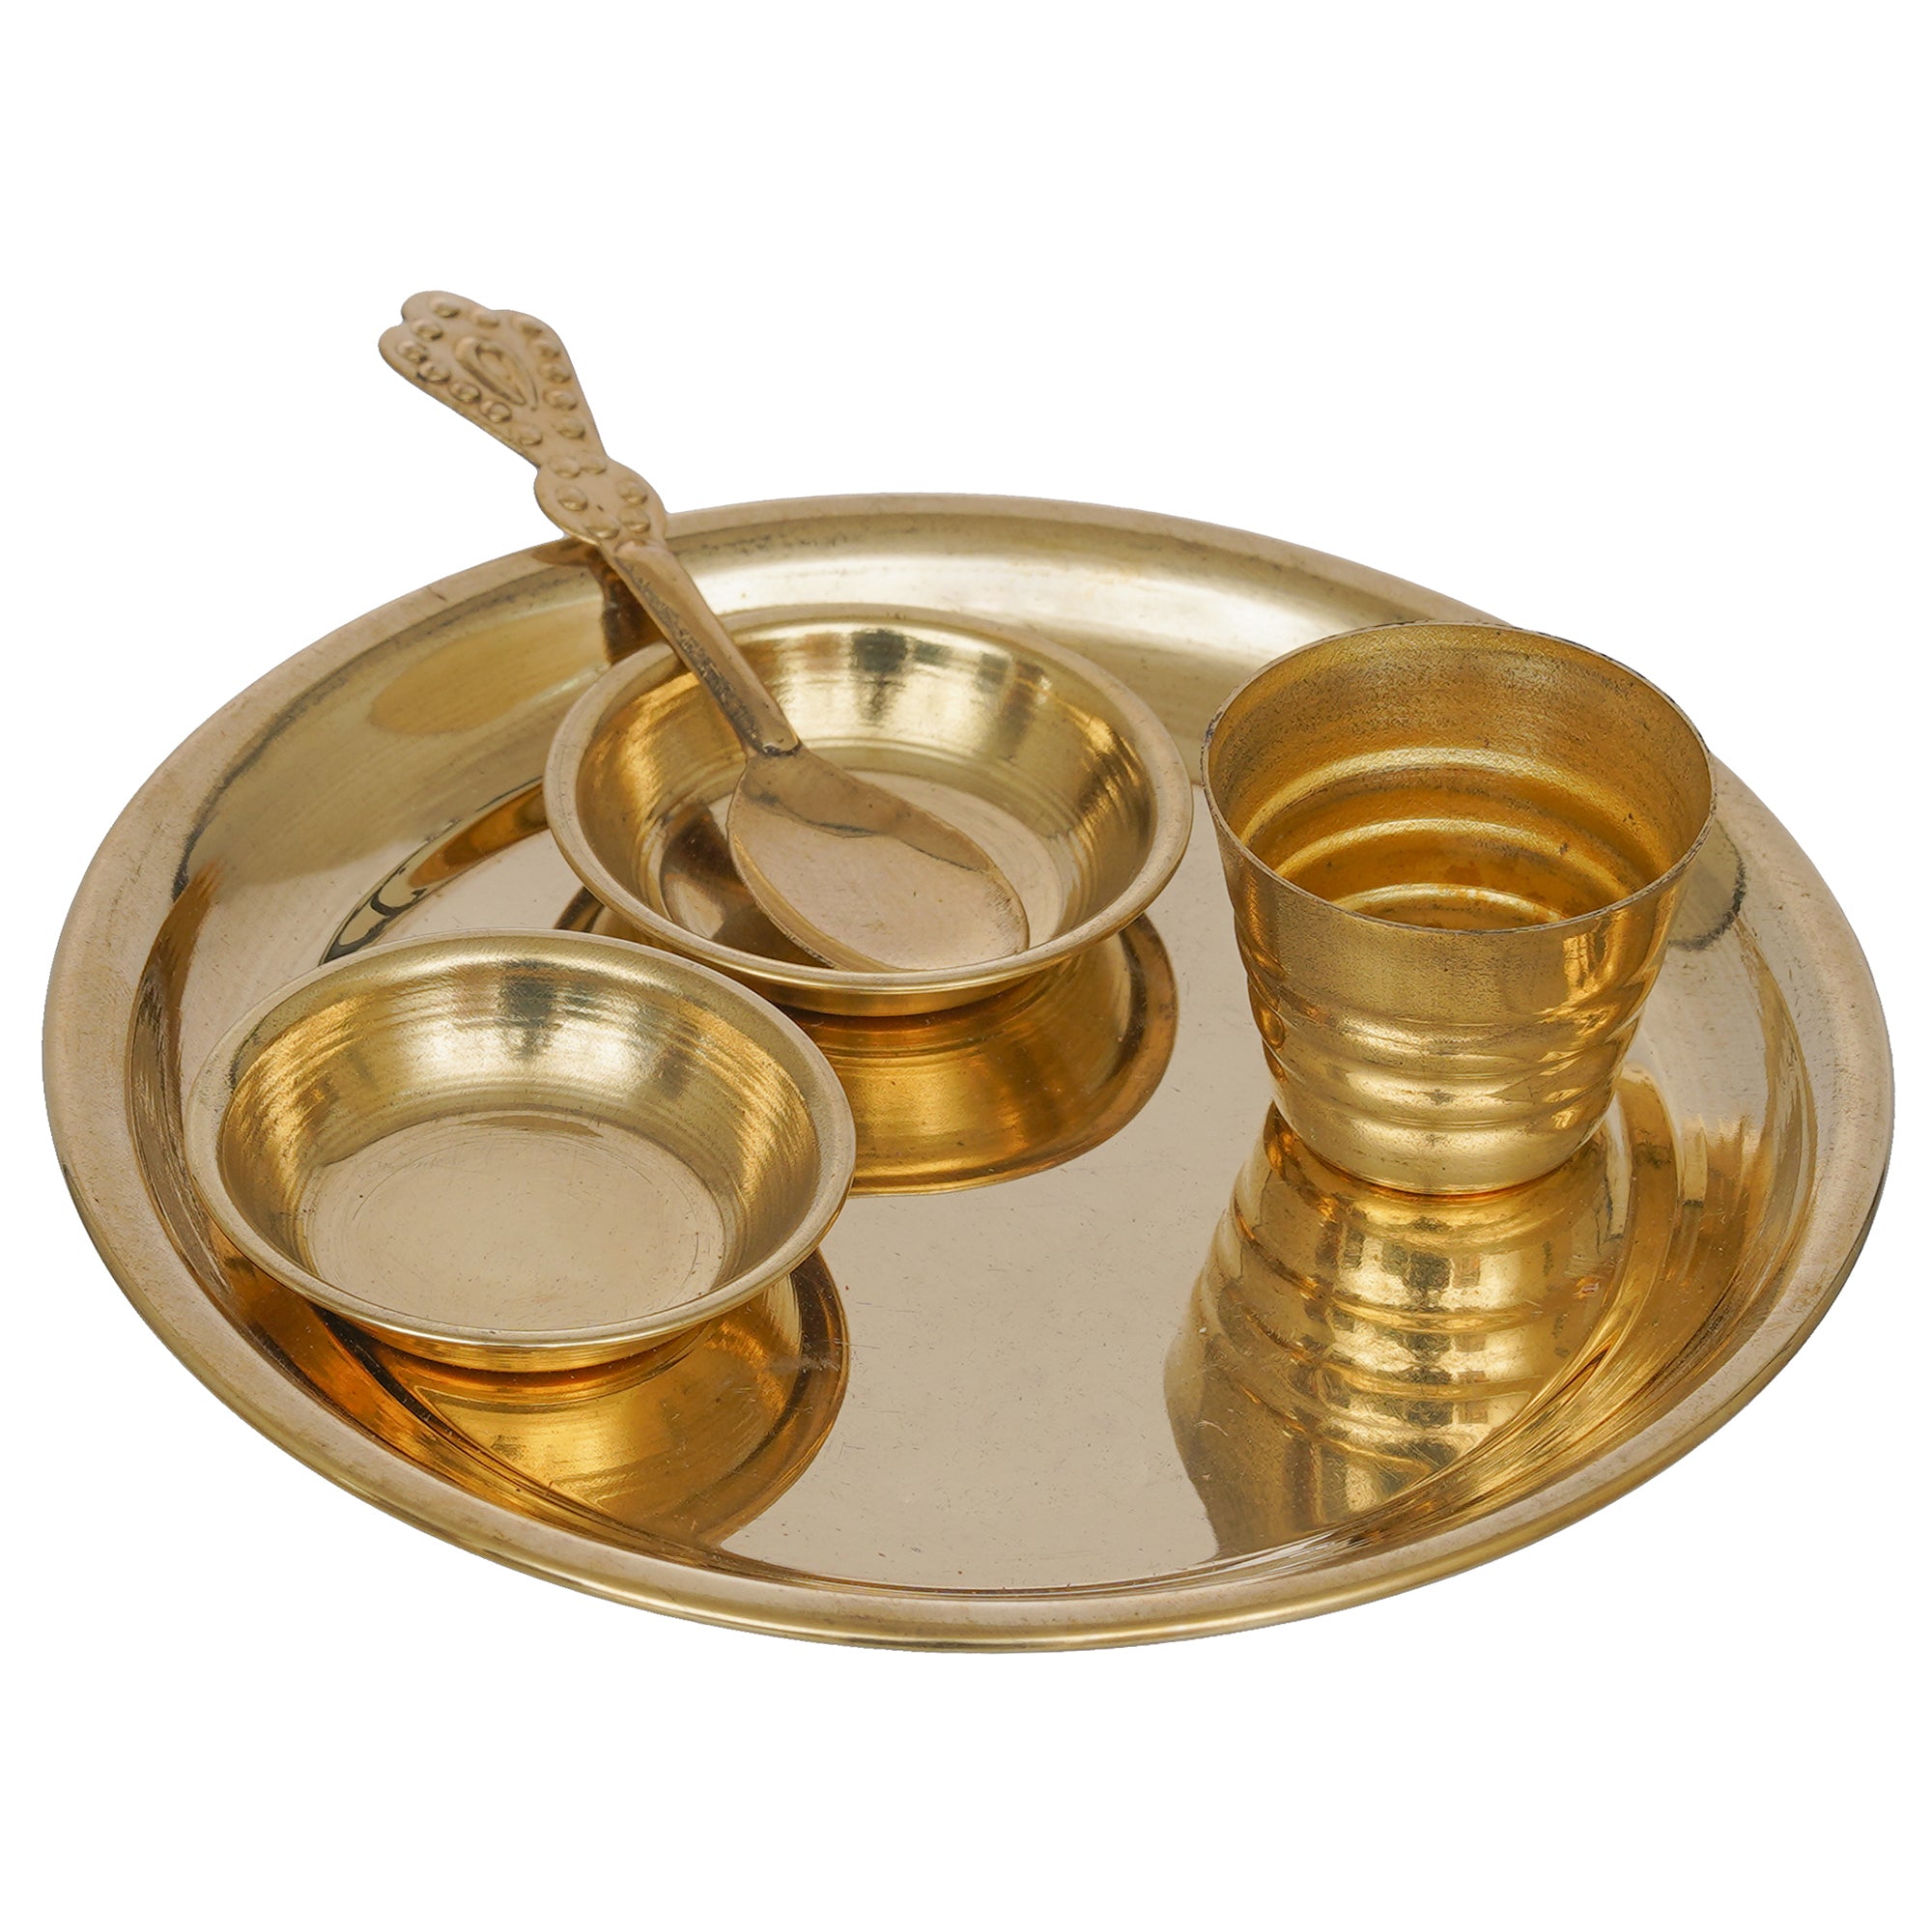 eCraftIndia Golden Brass Pooja Thali With 2 Bowls, 1 Spoon & 1 Glass 3